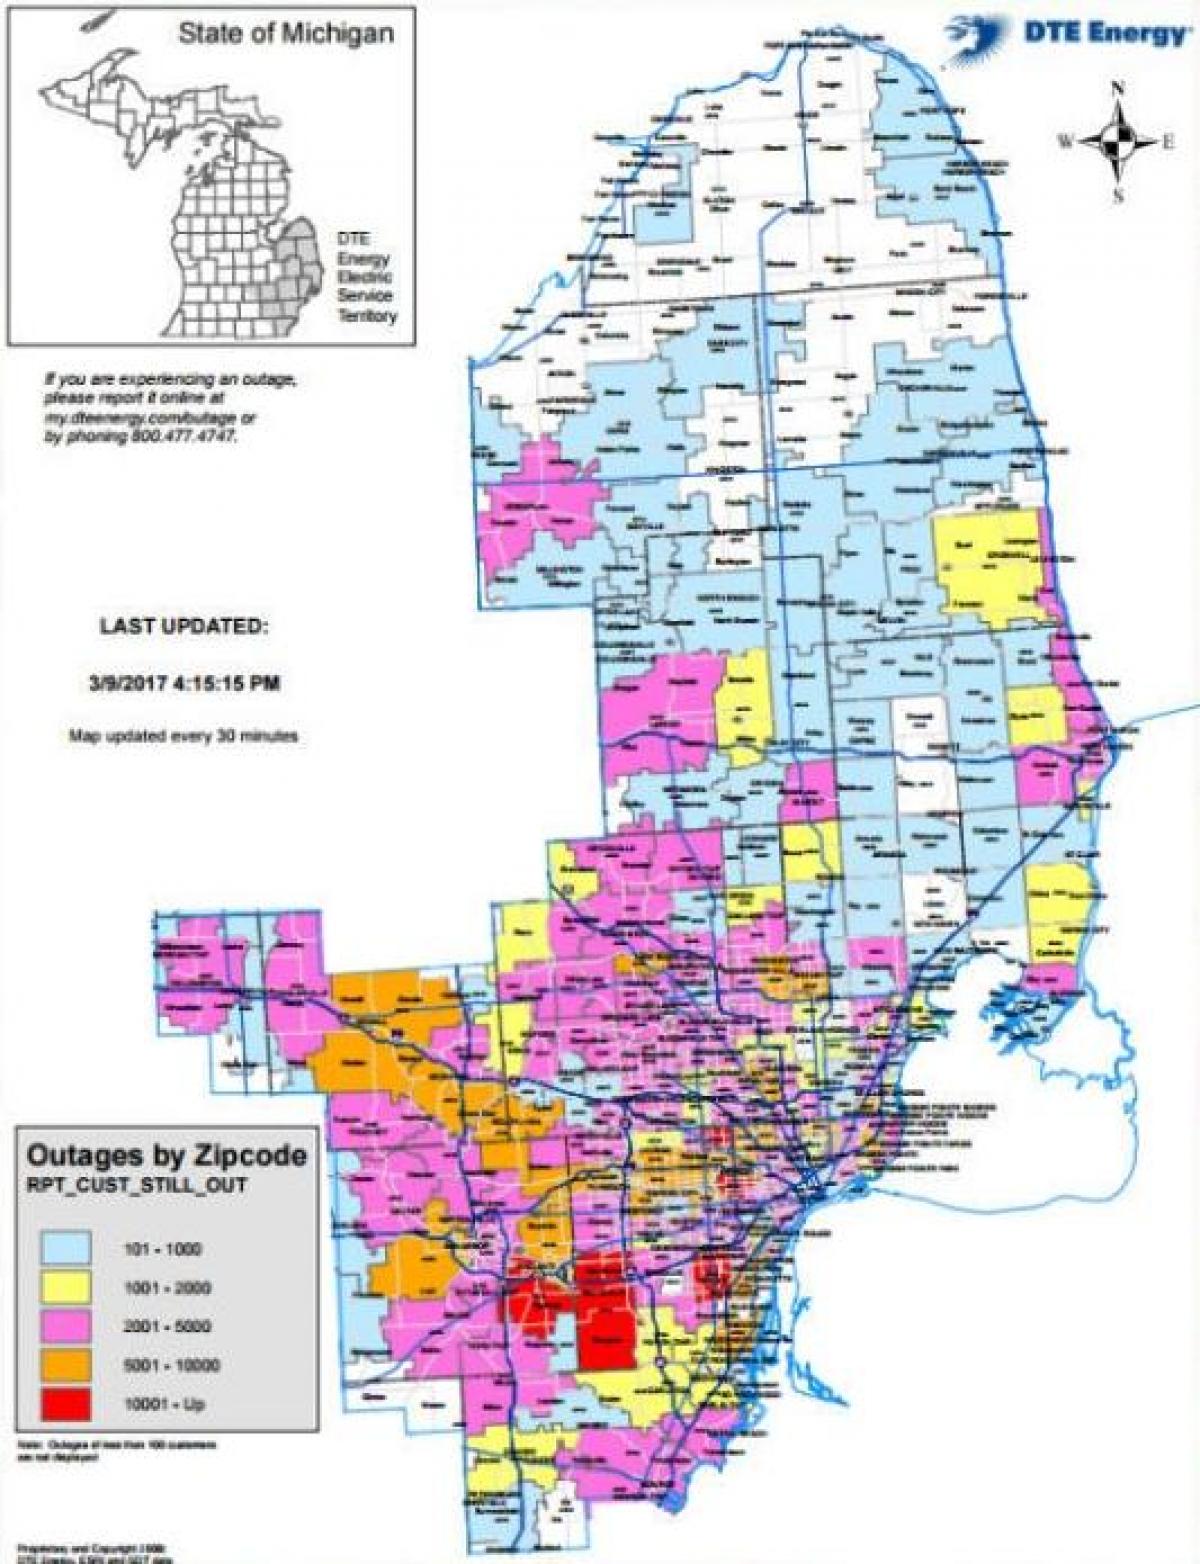 Detroit edison pemadaman listrik peta